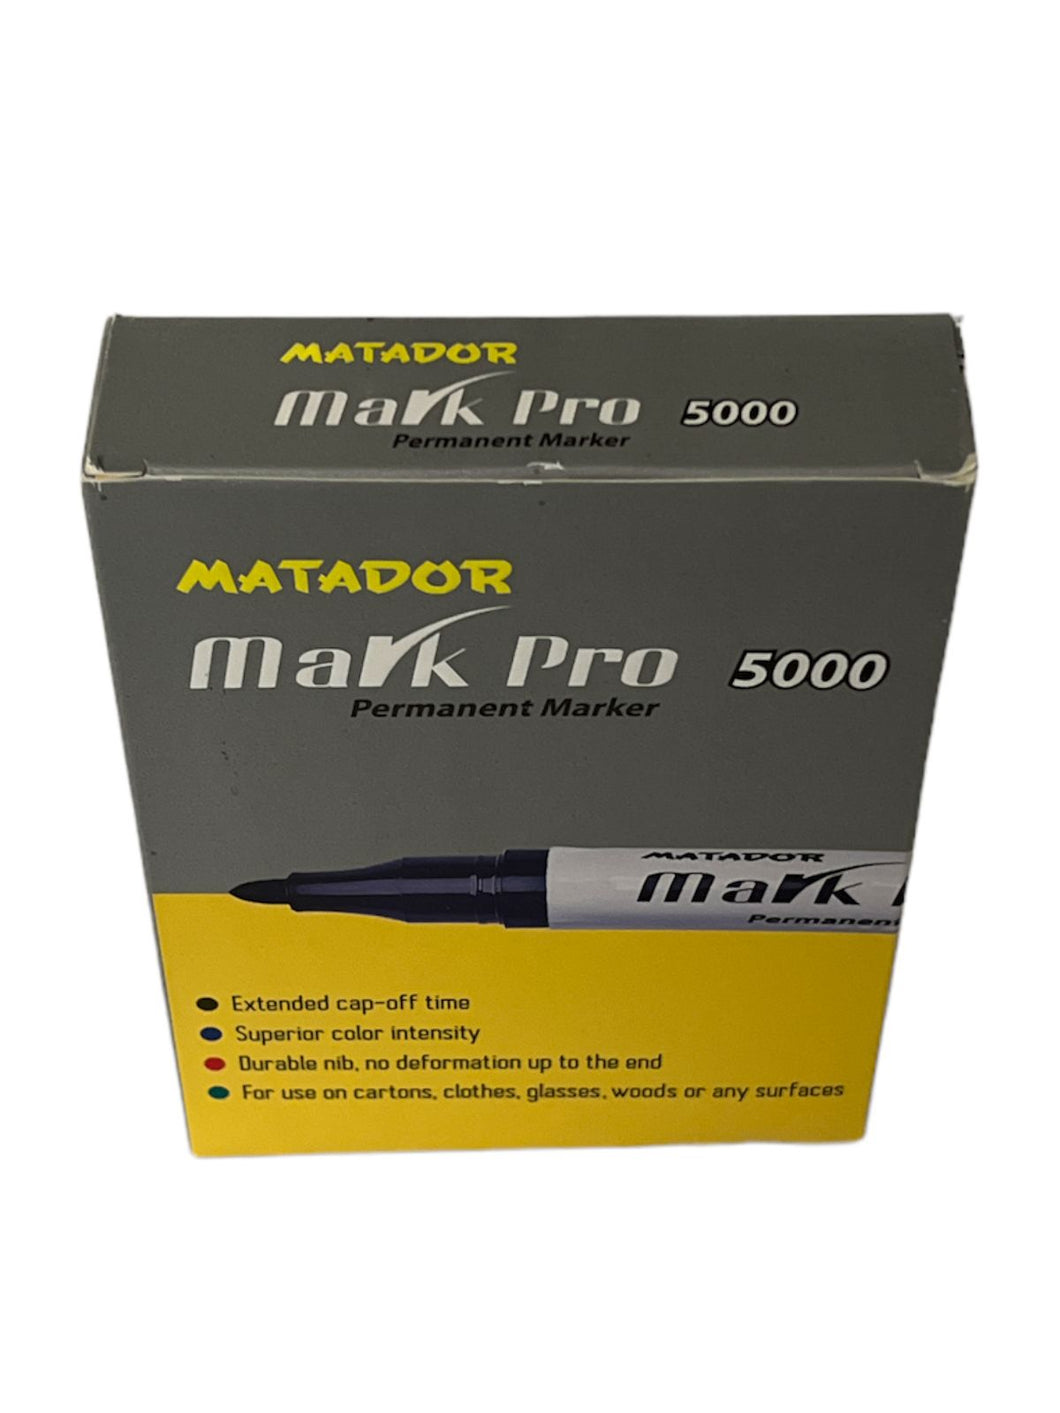 Matador Markpro Permanent Marker 5000